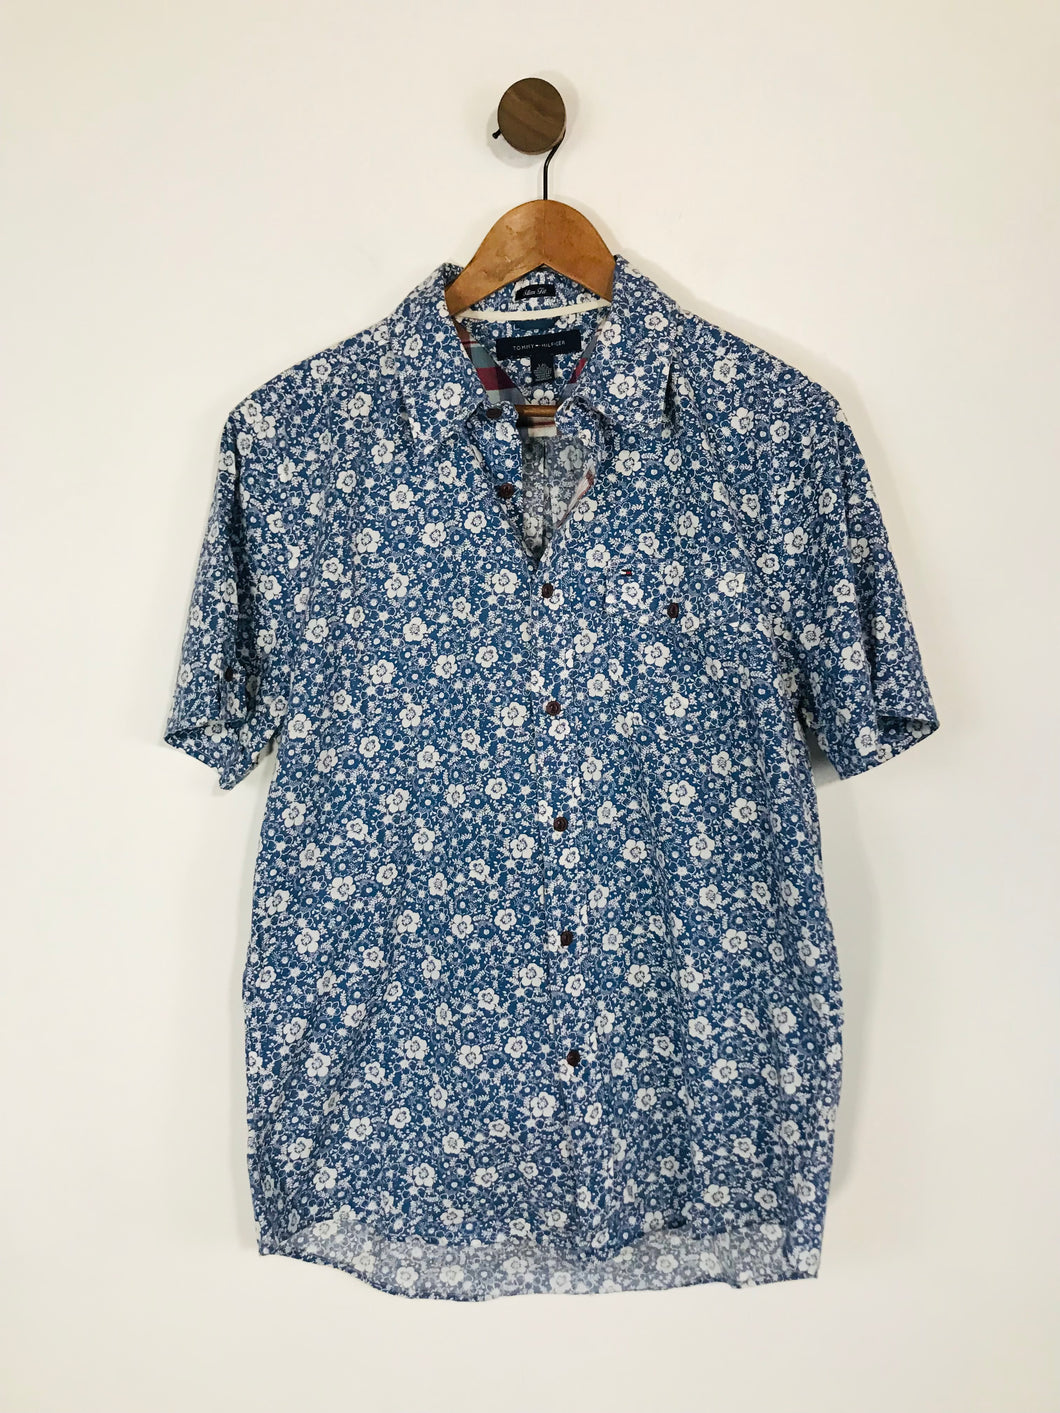 Tommy Hilfiger Women's Floral Short Sleeve Button-Up Shirt | L UK14 | Blue